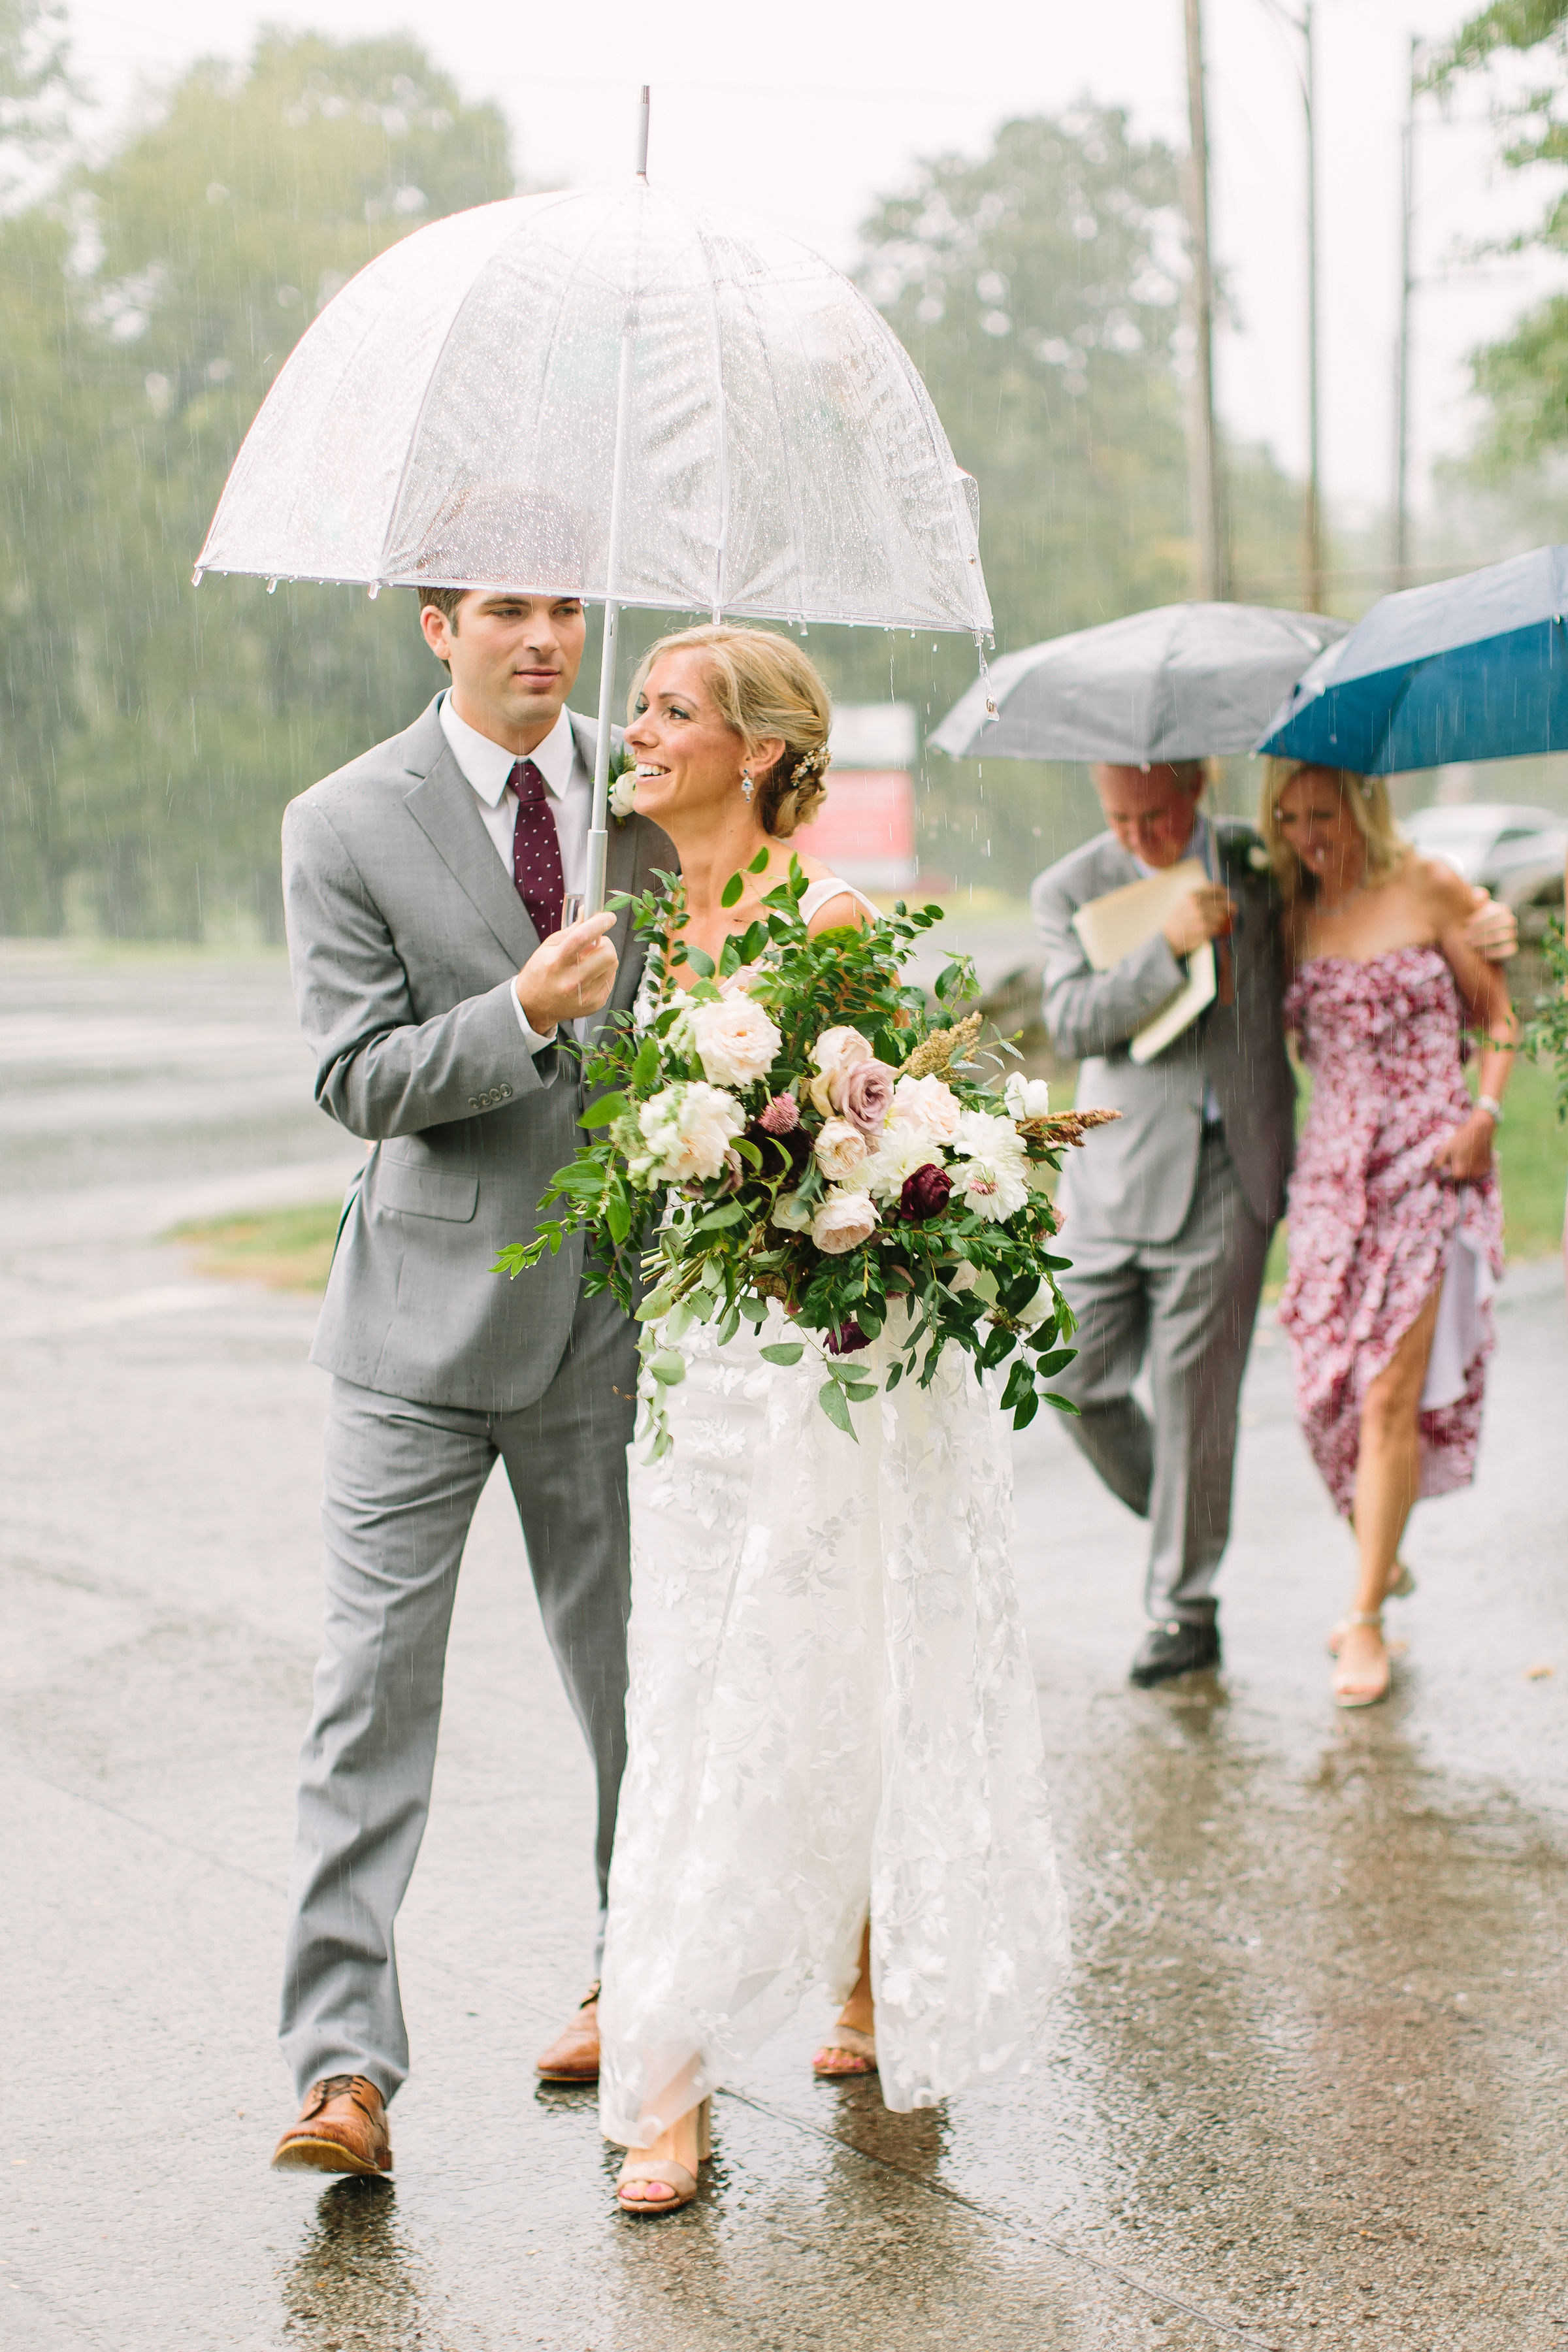 New Orleans style wedding parade in the rain // Nashville Wedding Florist